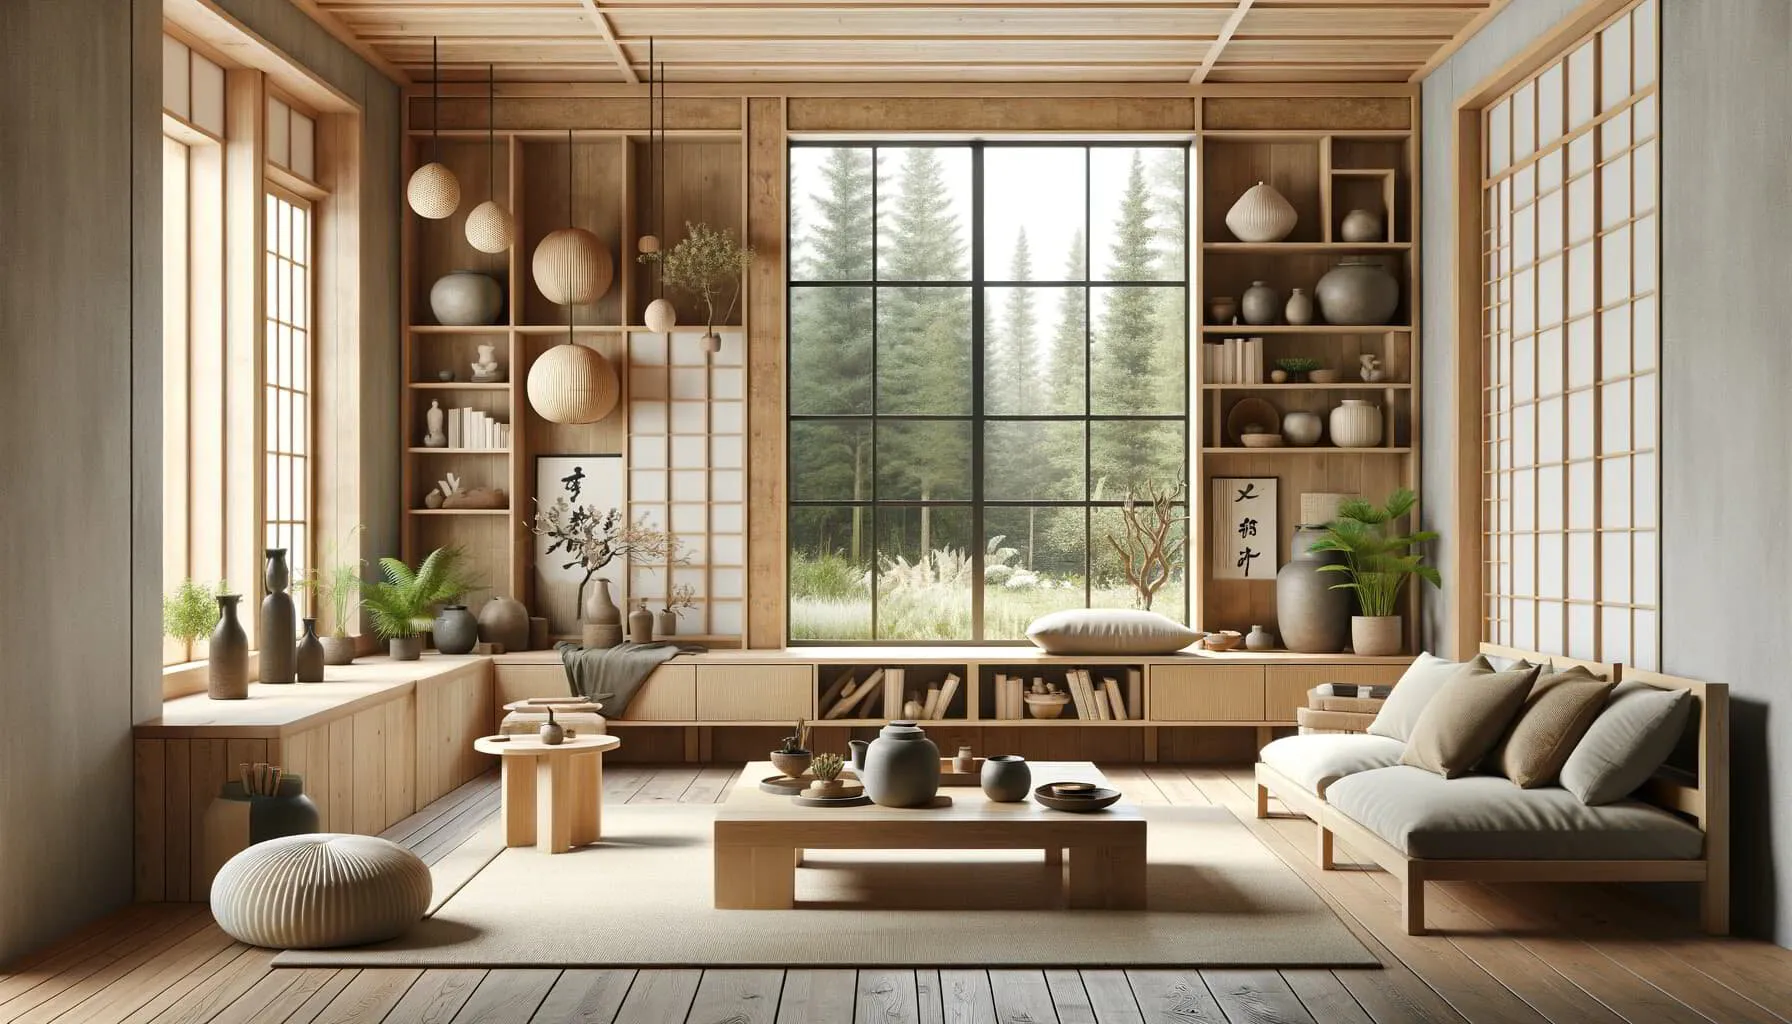 japandi interior design scene